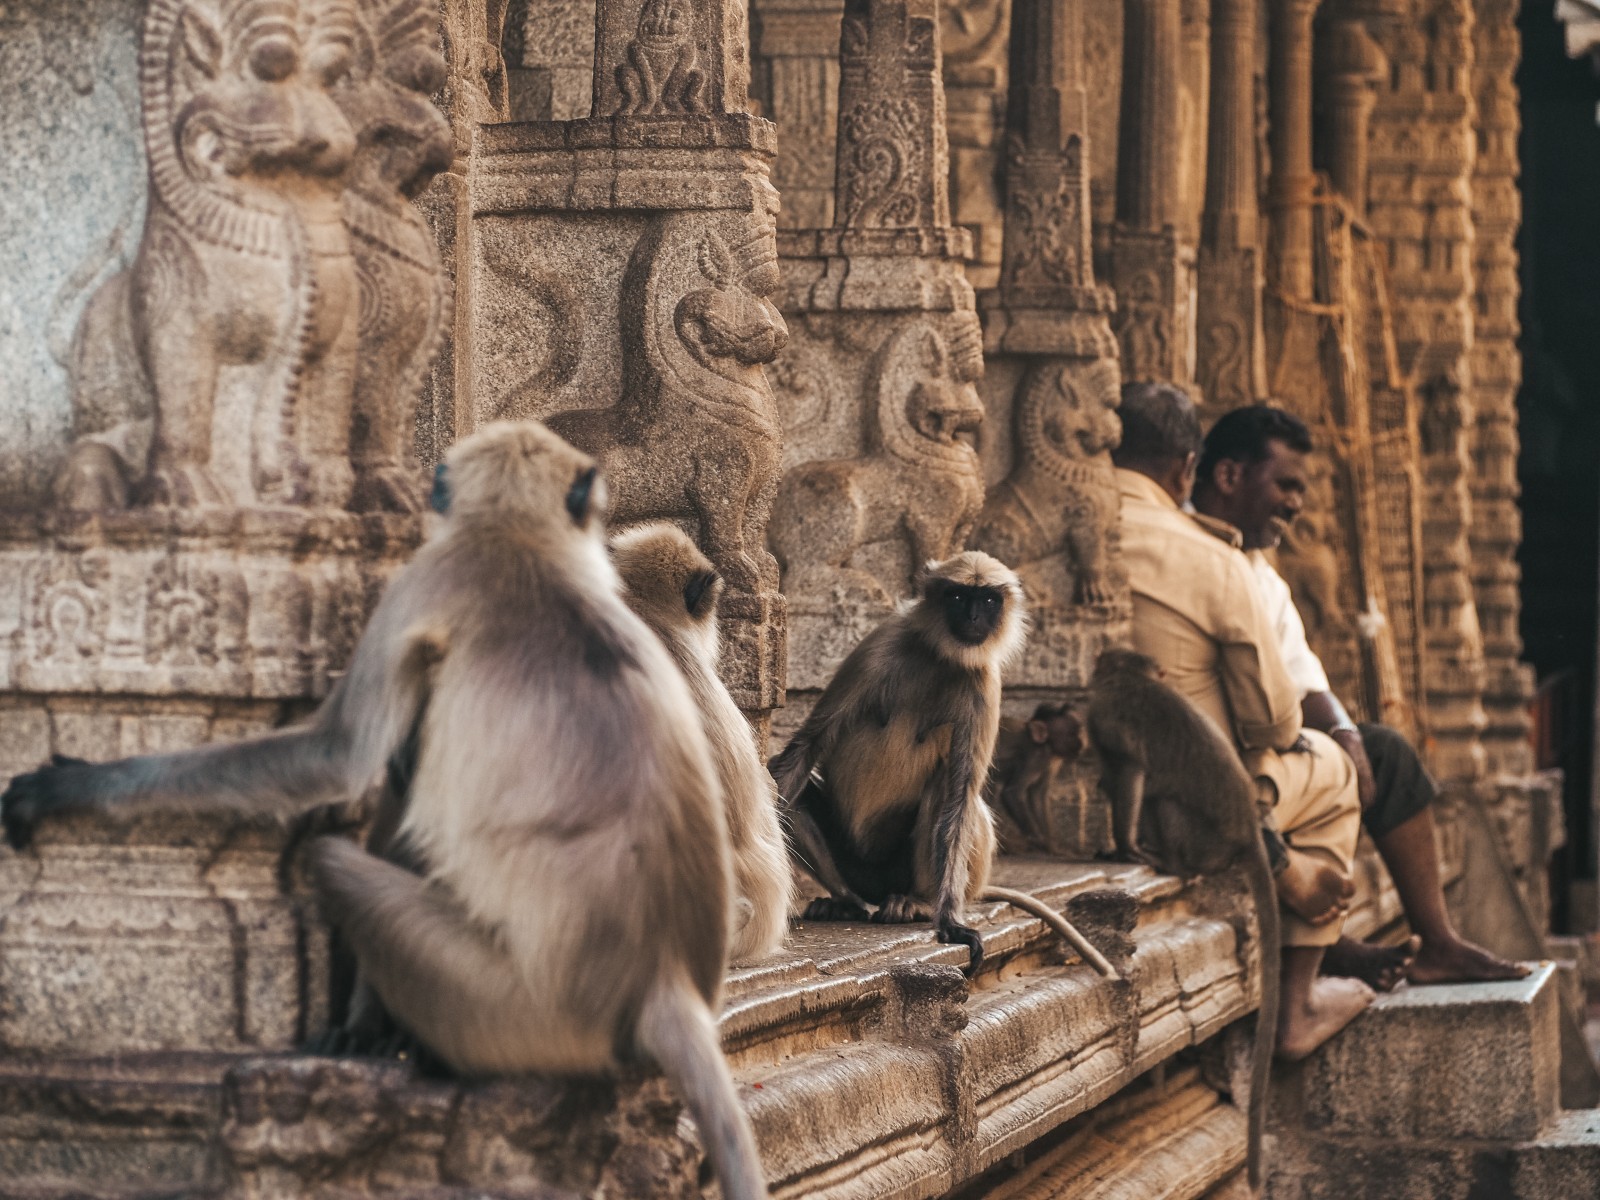 Monkeys in the temple in Varkala